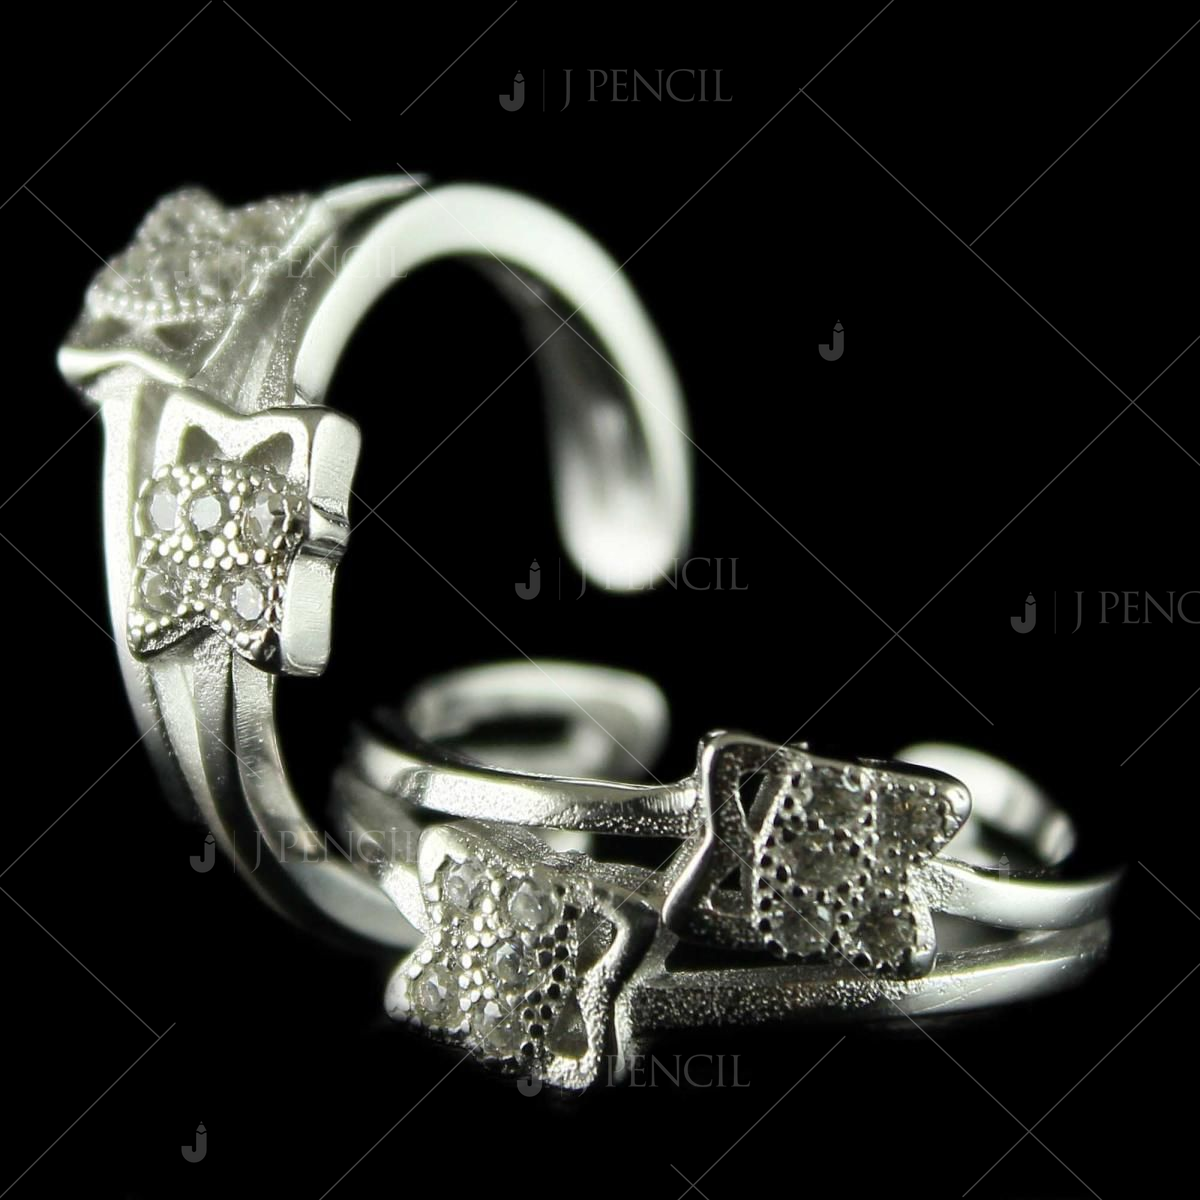 99% Fancy Nang Chain Silver Toe Ring, Size: 6 mm (dia) at Rs 65/gram in  Rajkot